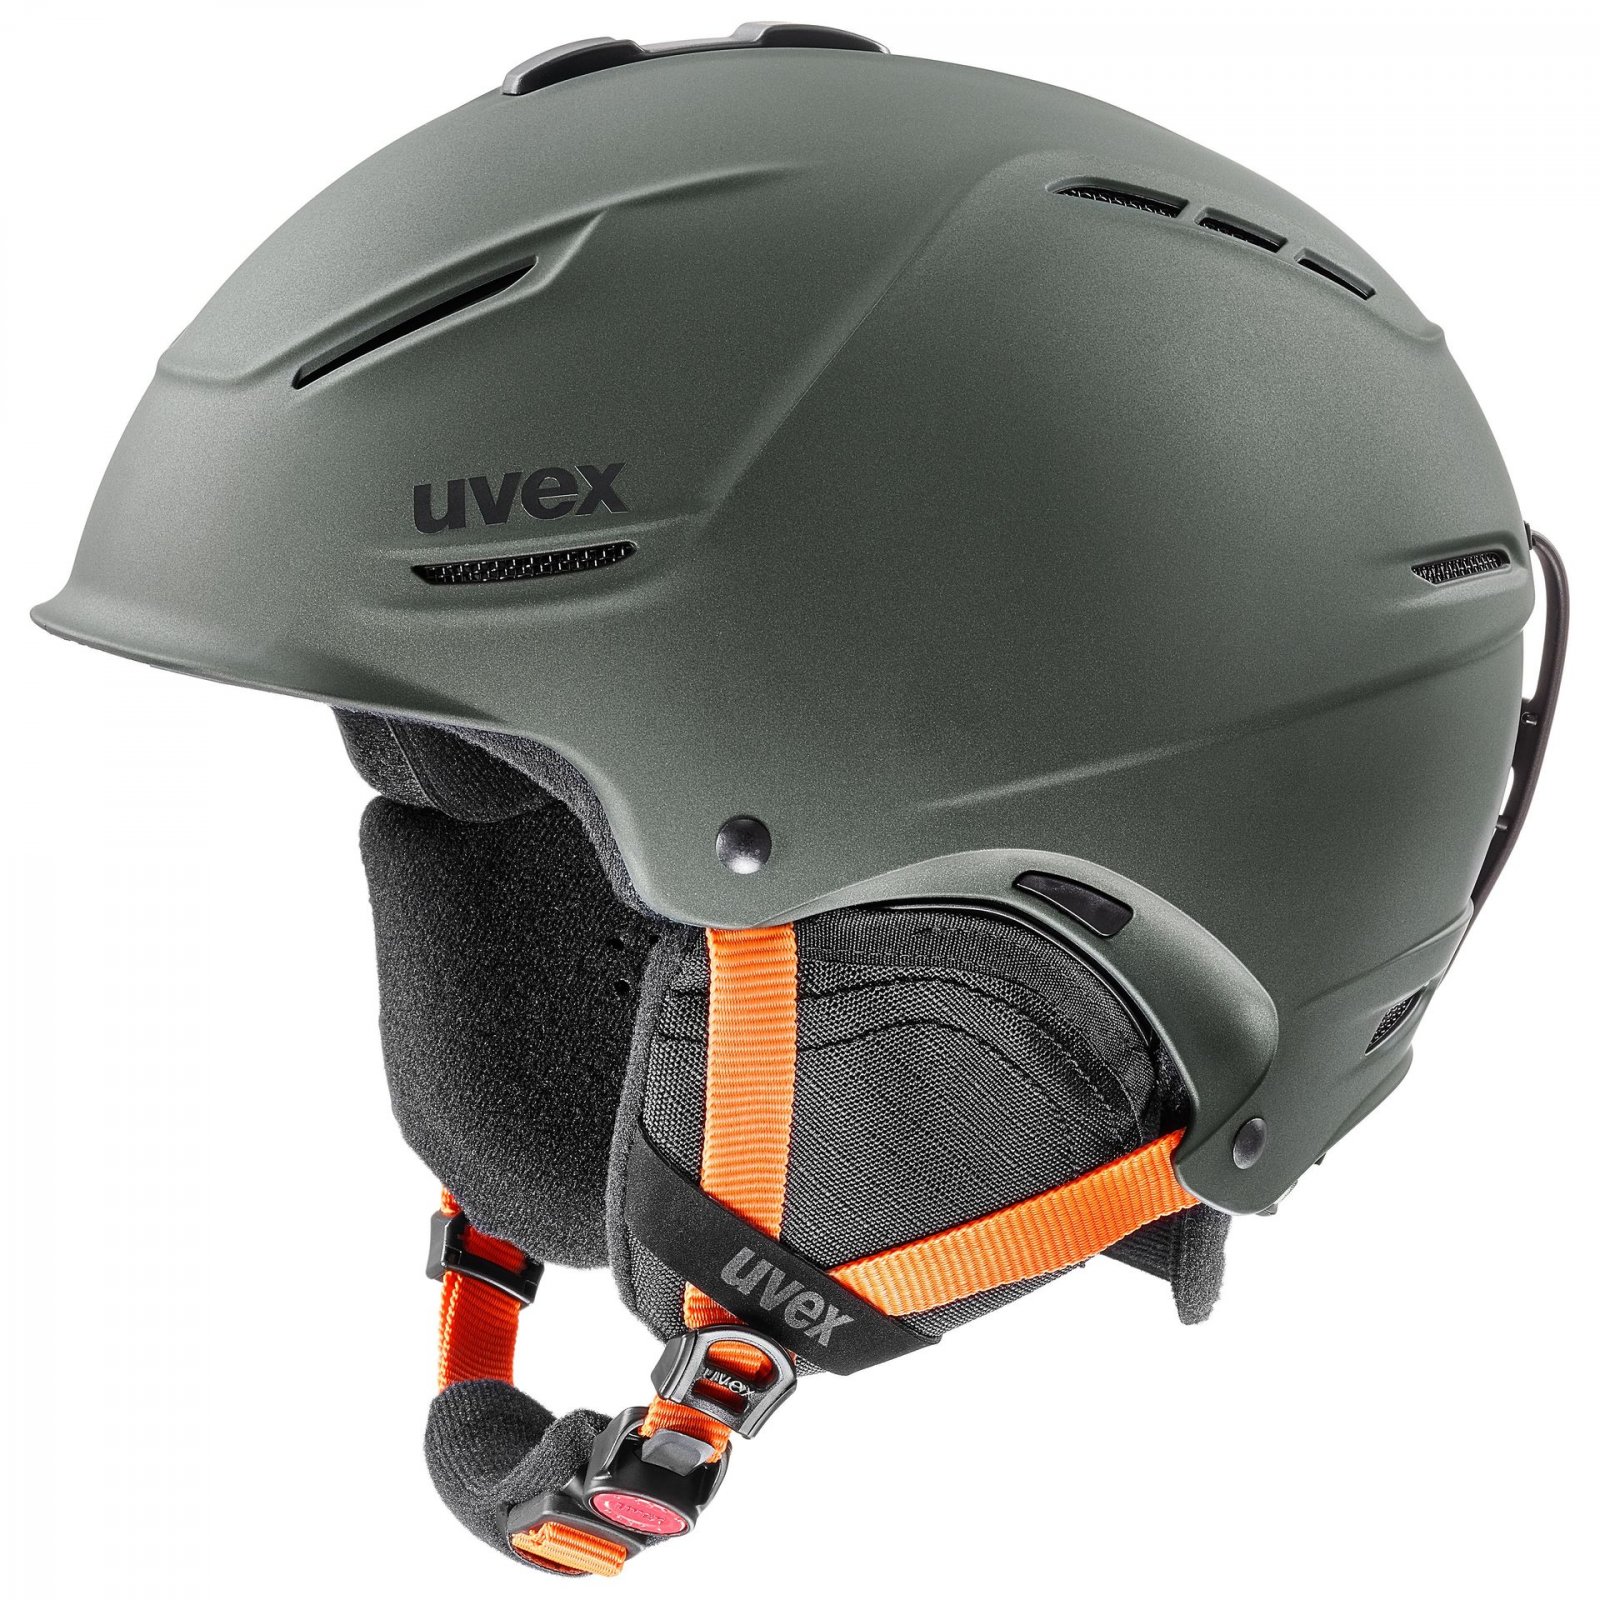 Observatorium gezantschap Scenario Ski helmet UVEX plus 2.0 19/20 | Sportheaters.com